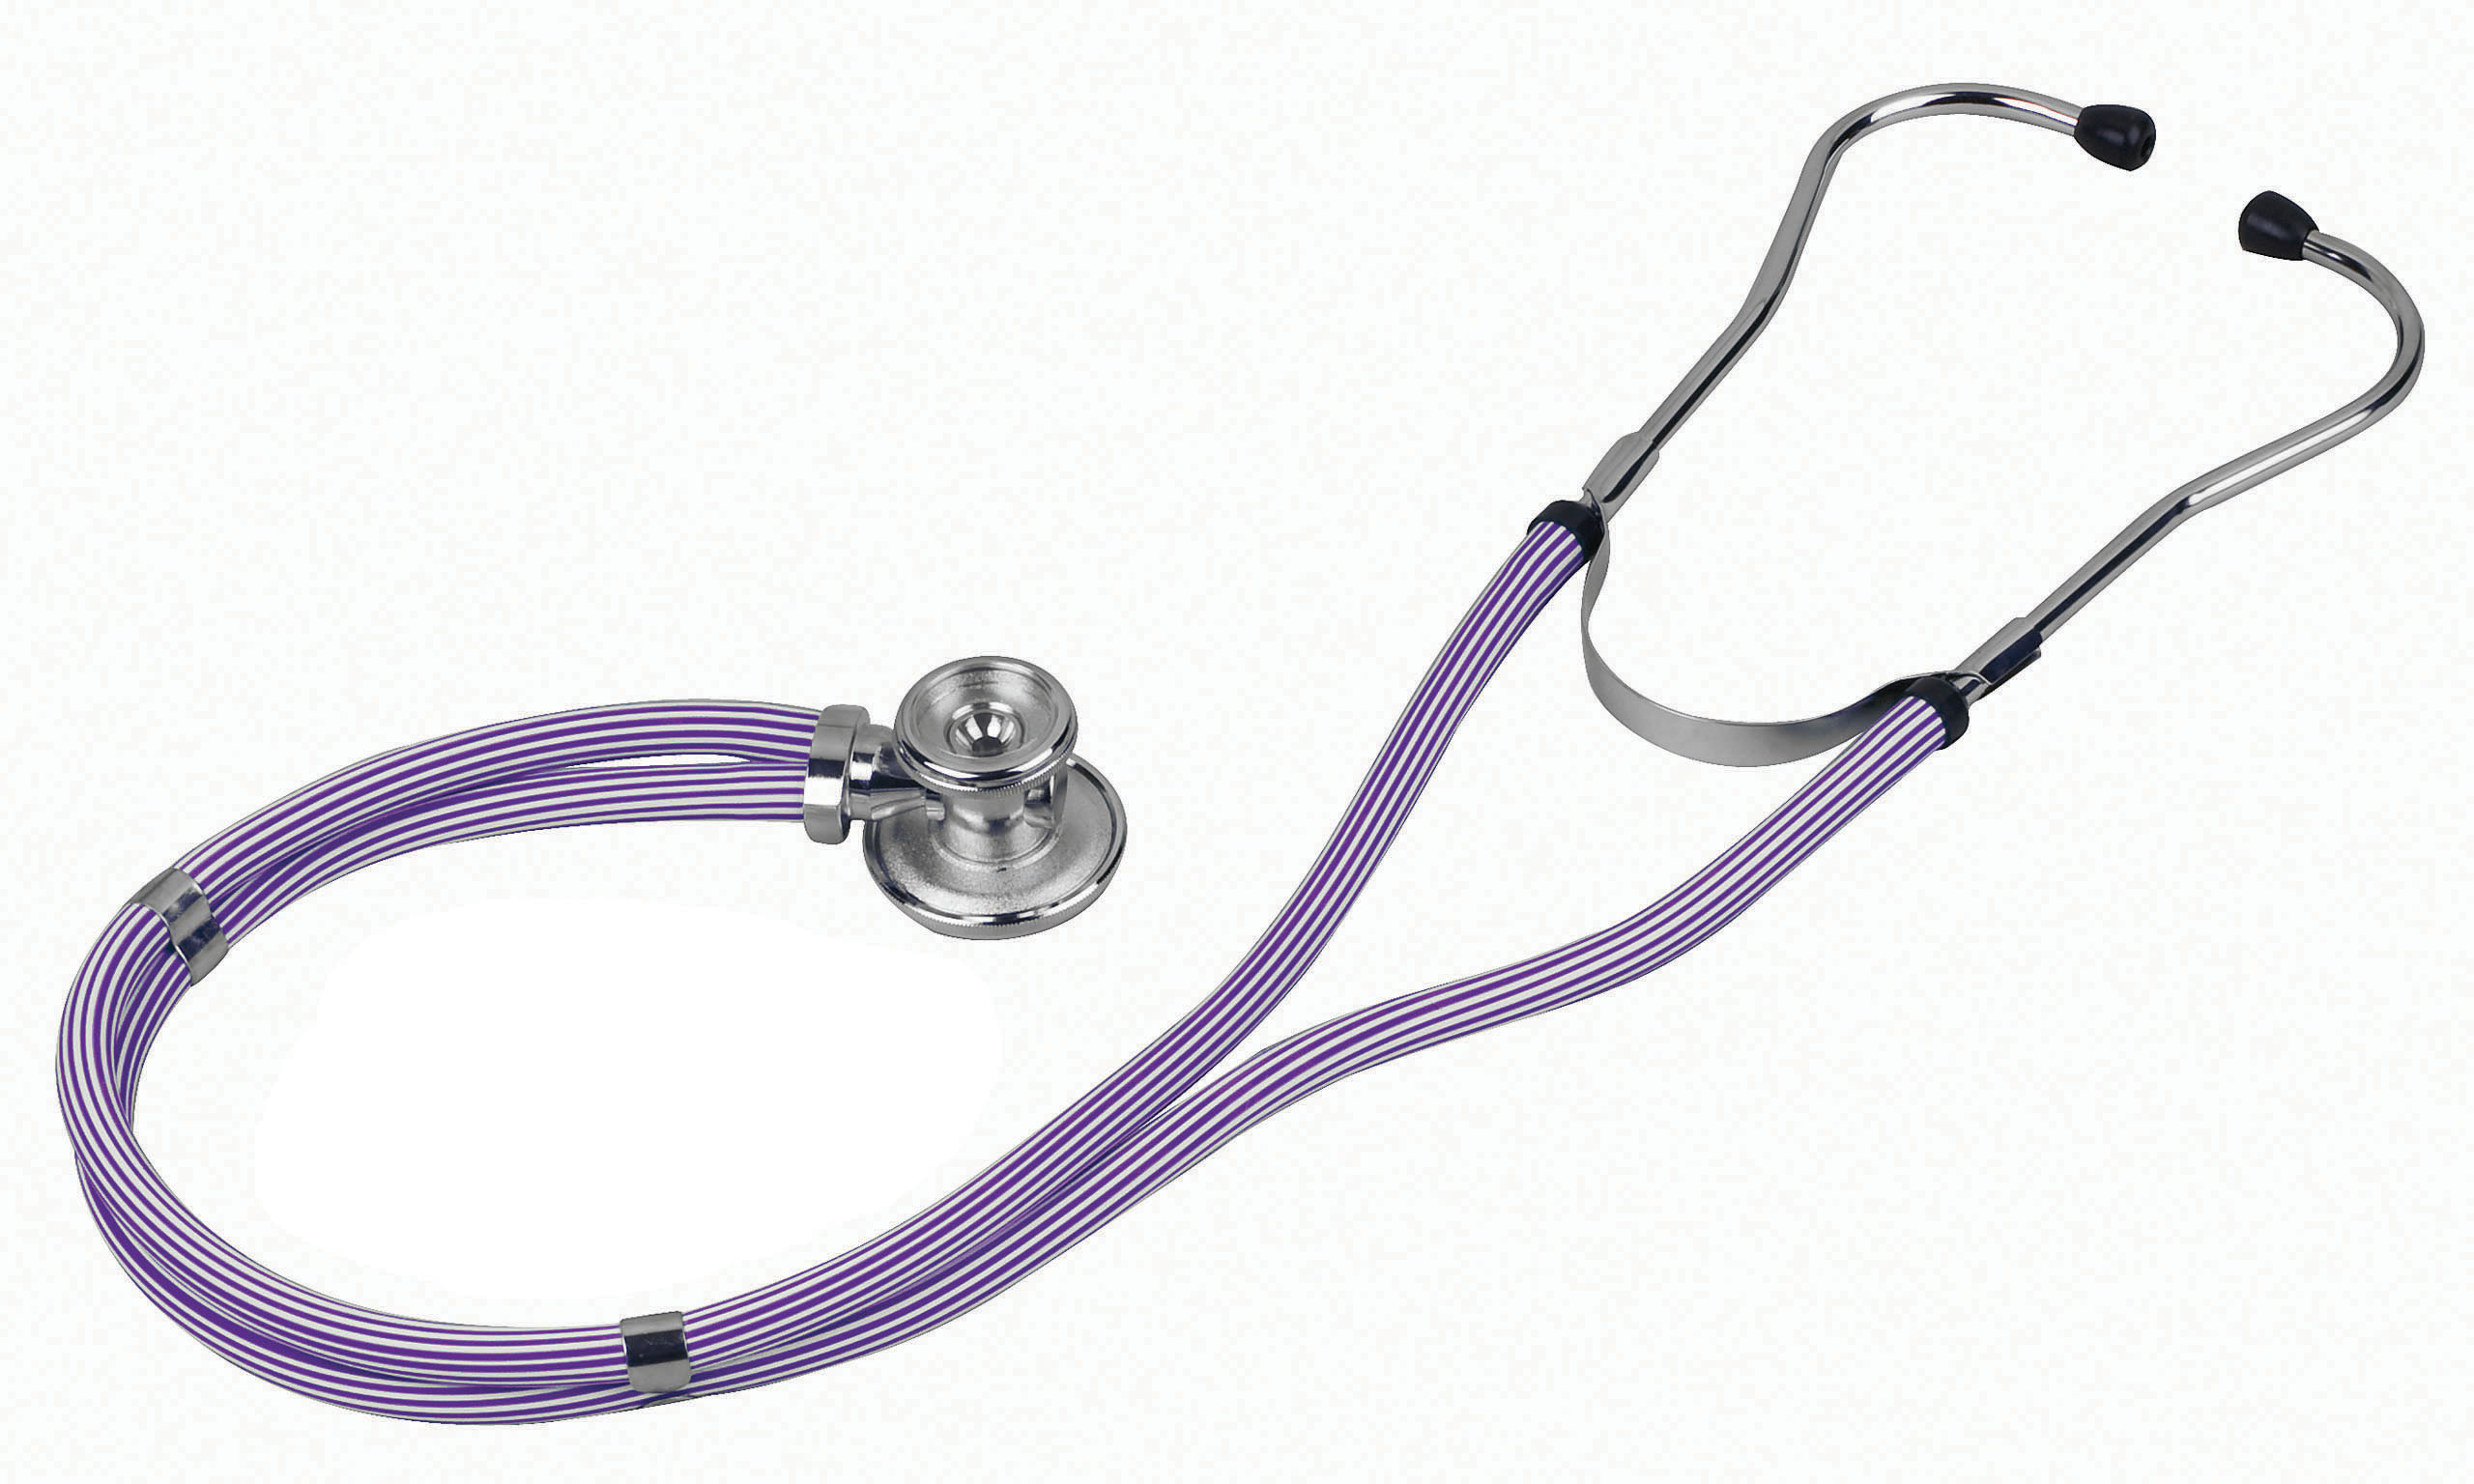 sterling-series-sprague-rappaport-type-stethoscope-purple-striped-slider-pack-05-11211-veridian-2.jpg